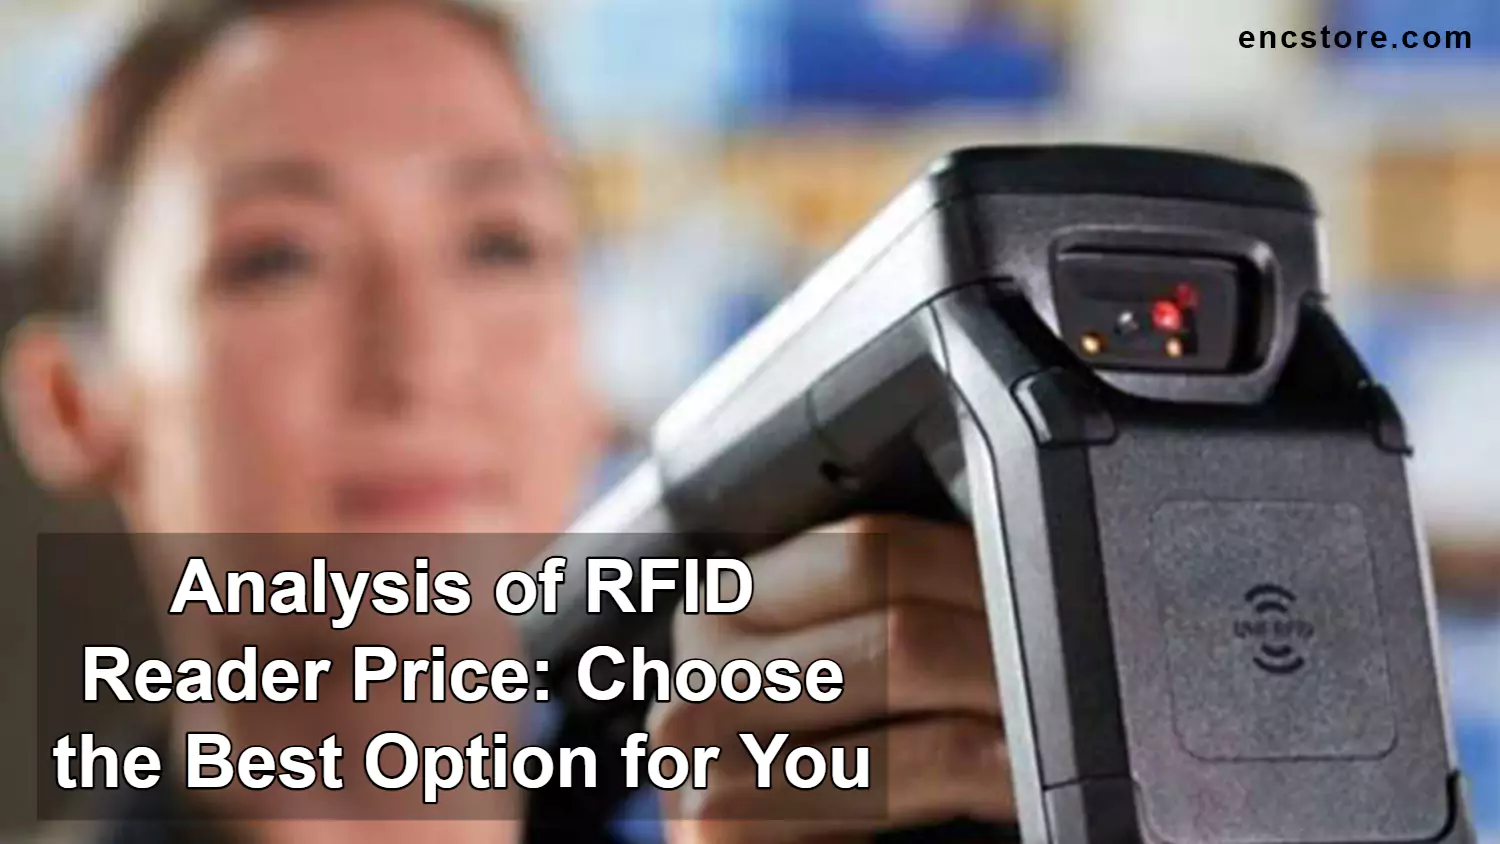 RFID Reader Price in India